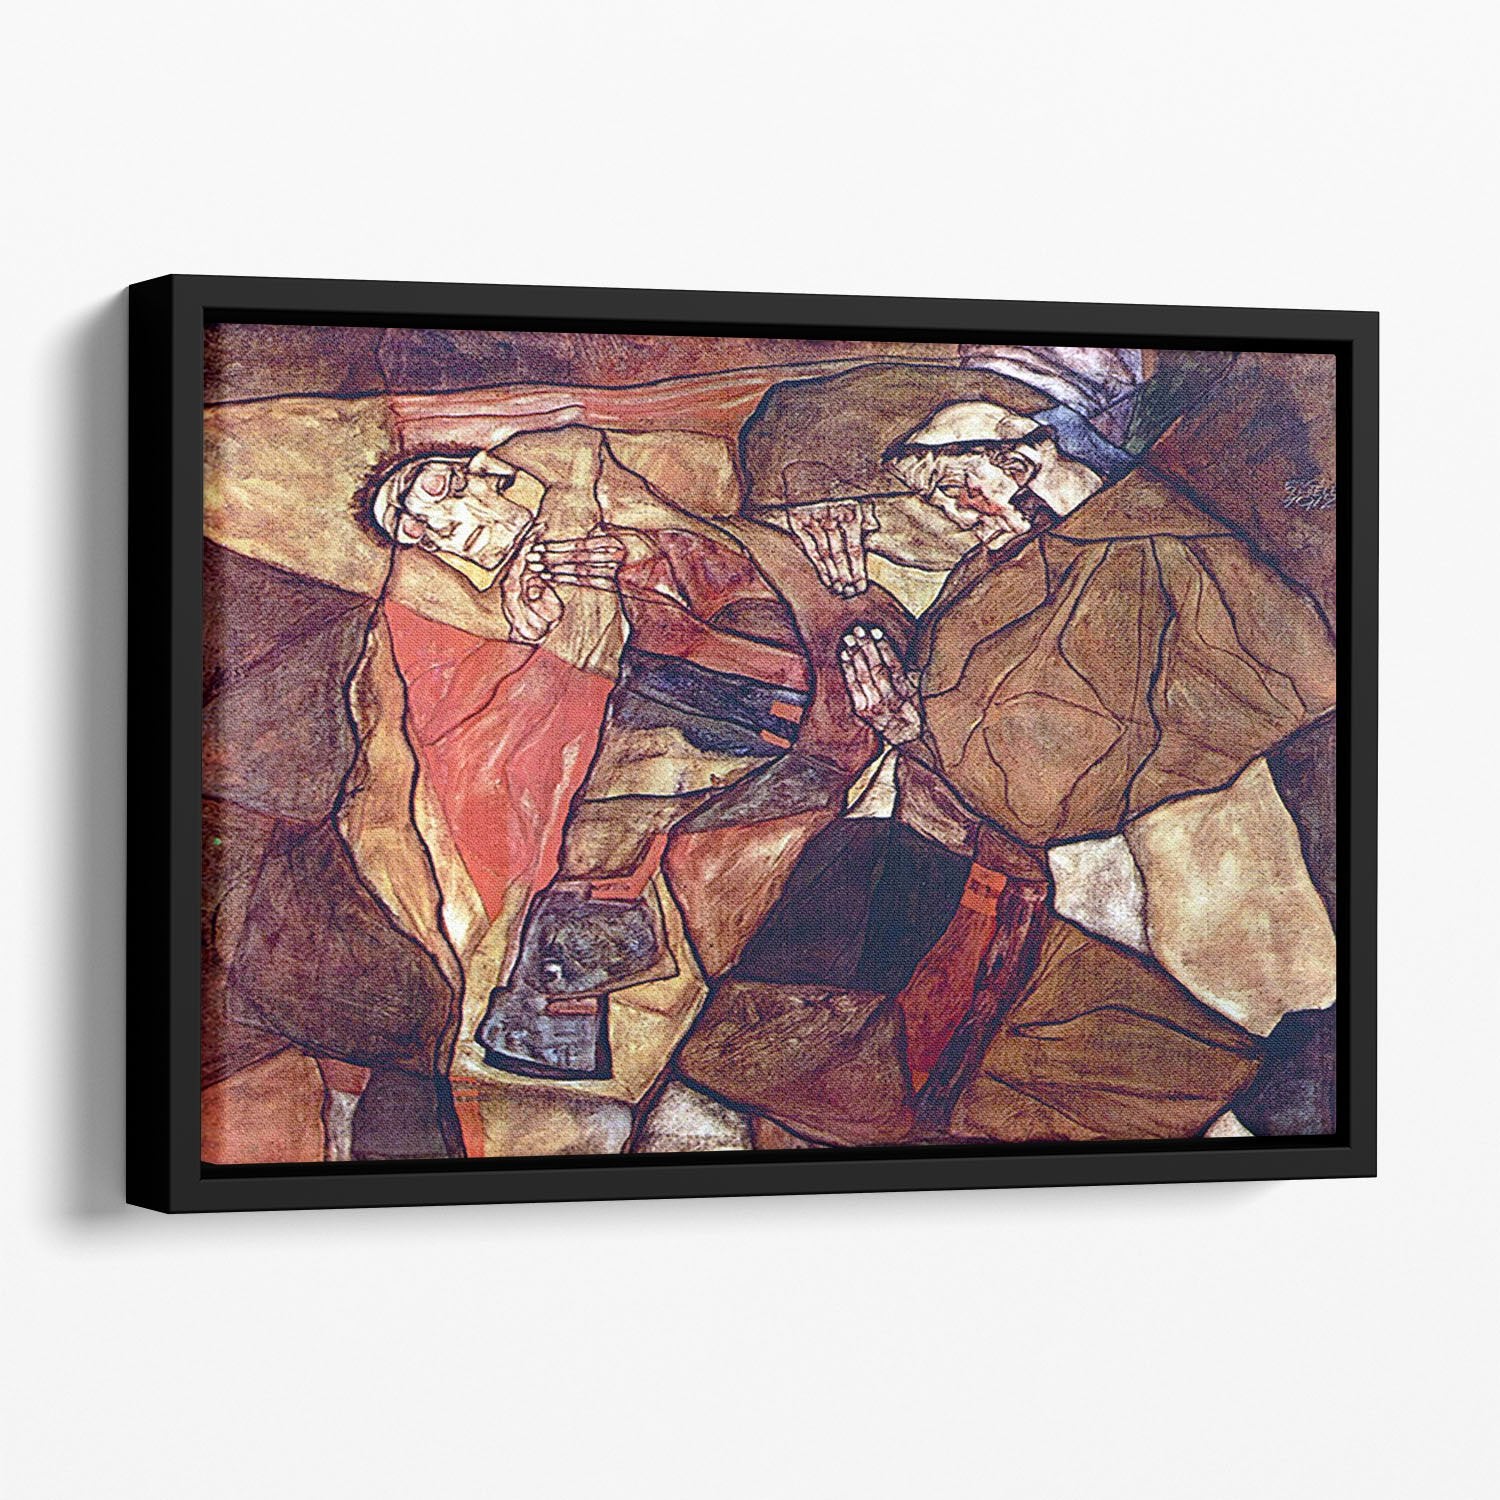 Agony The Death Struggle by Egon Schiele Floating Framed Canvas